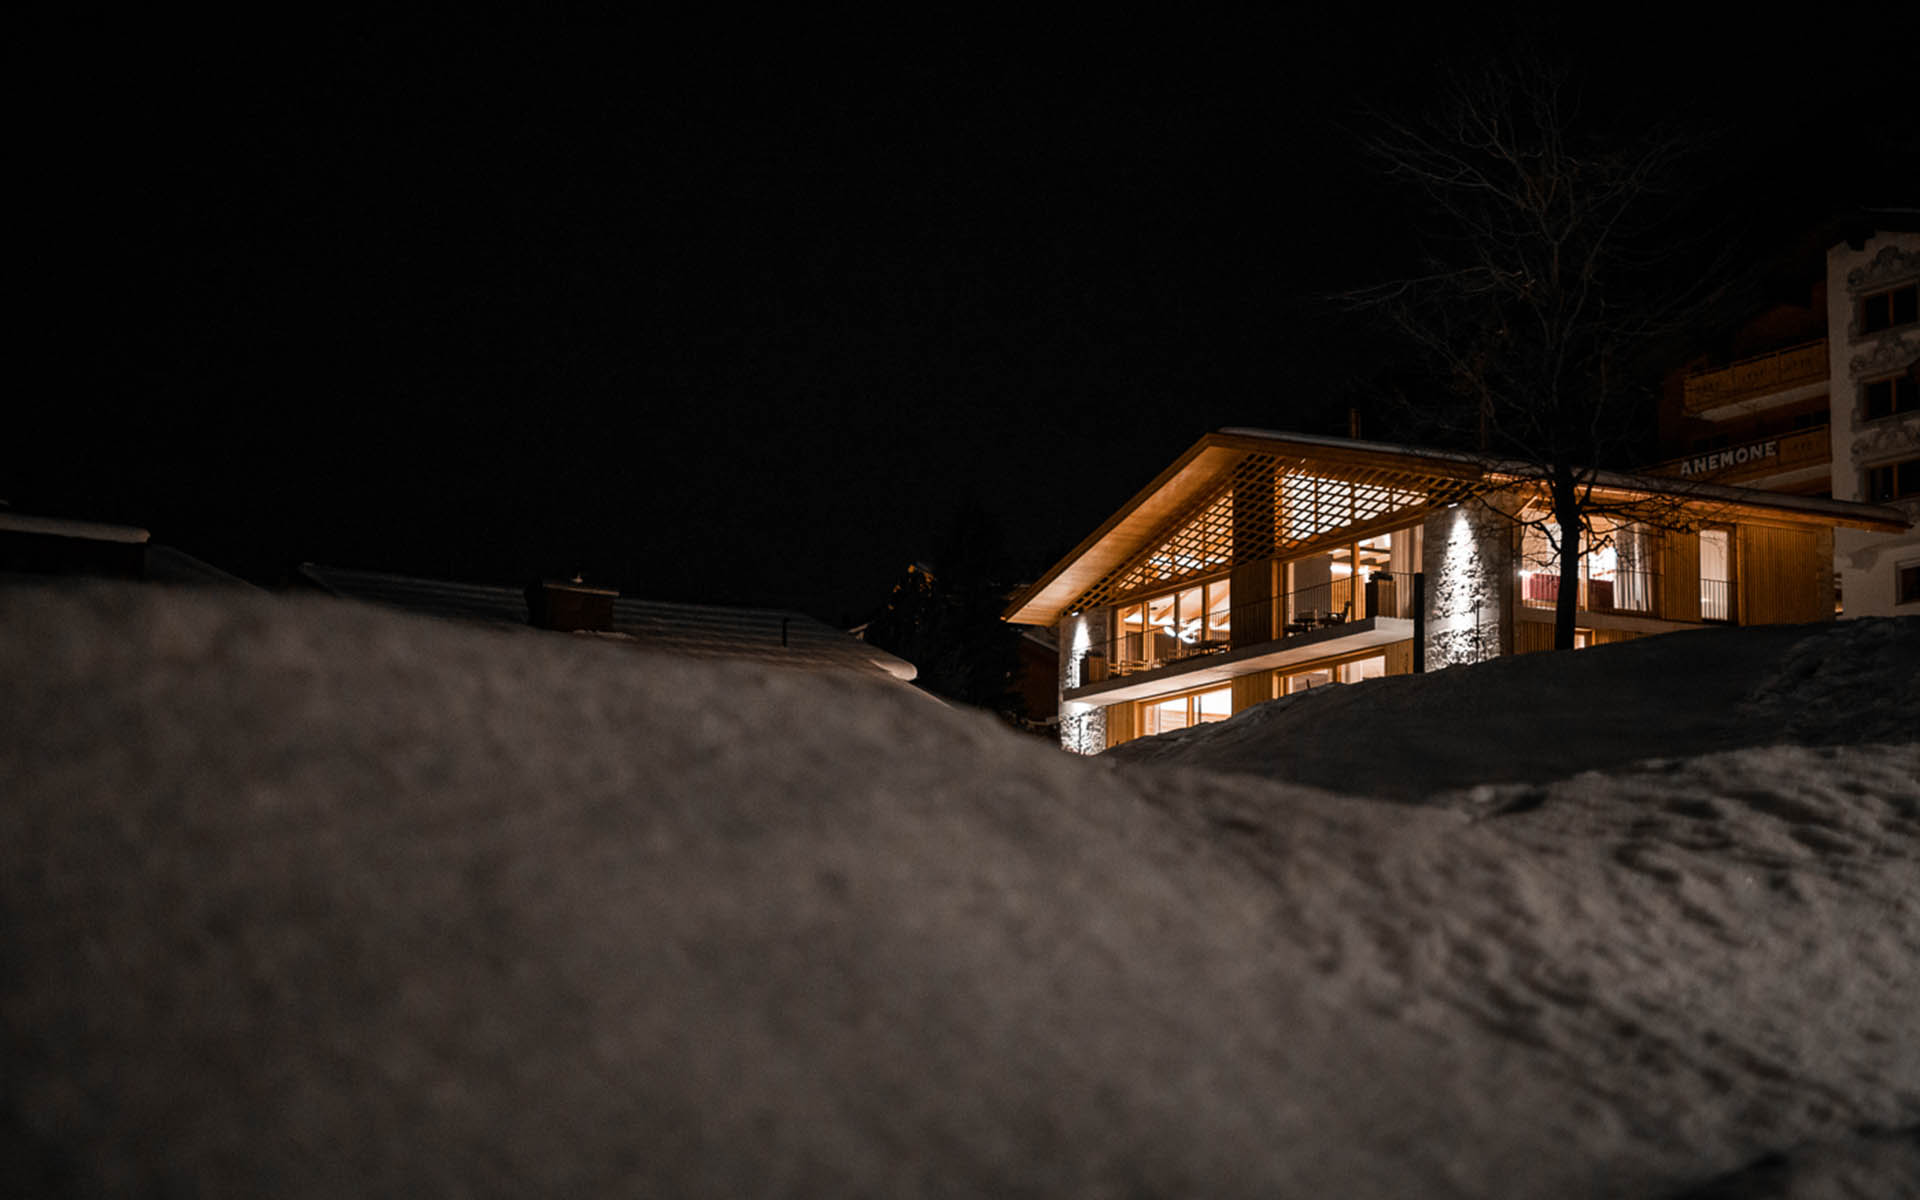 Grand Alpine Home, Lech